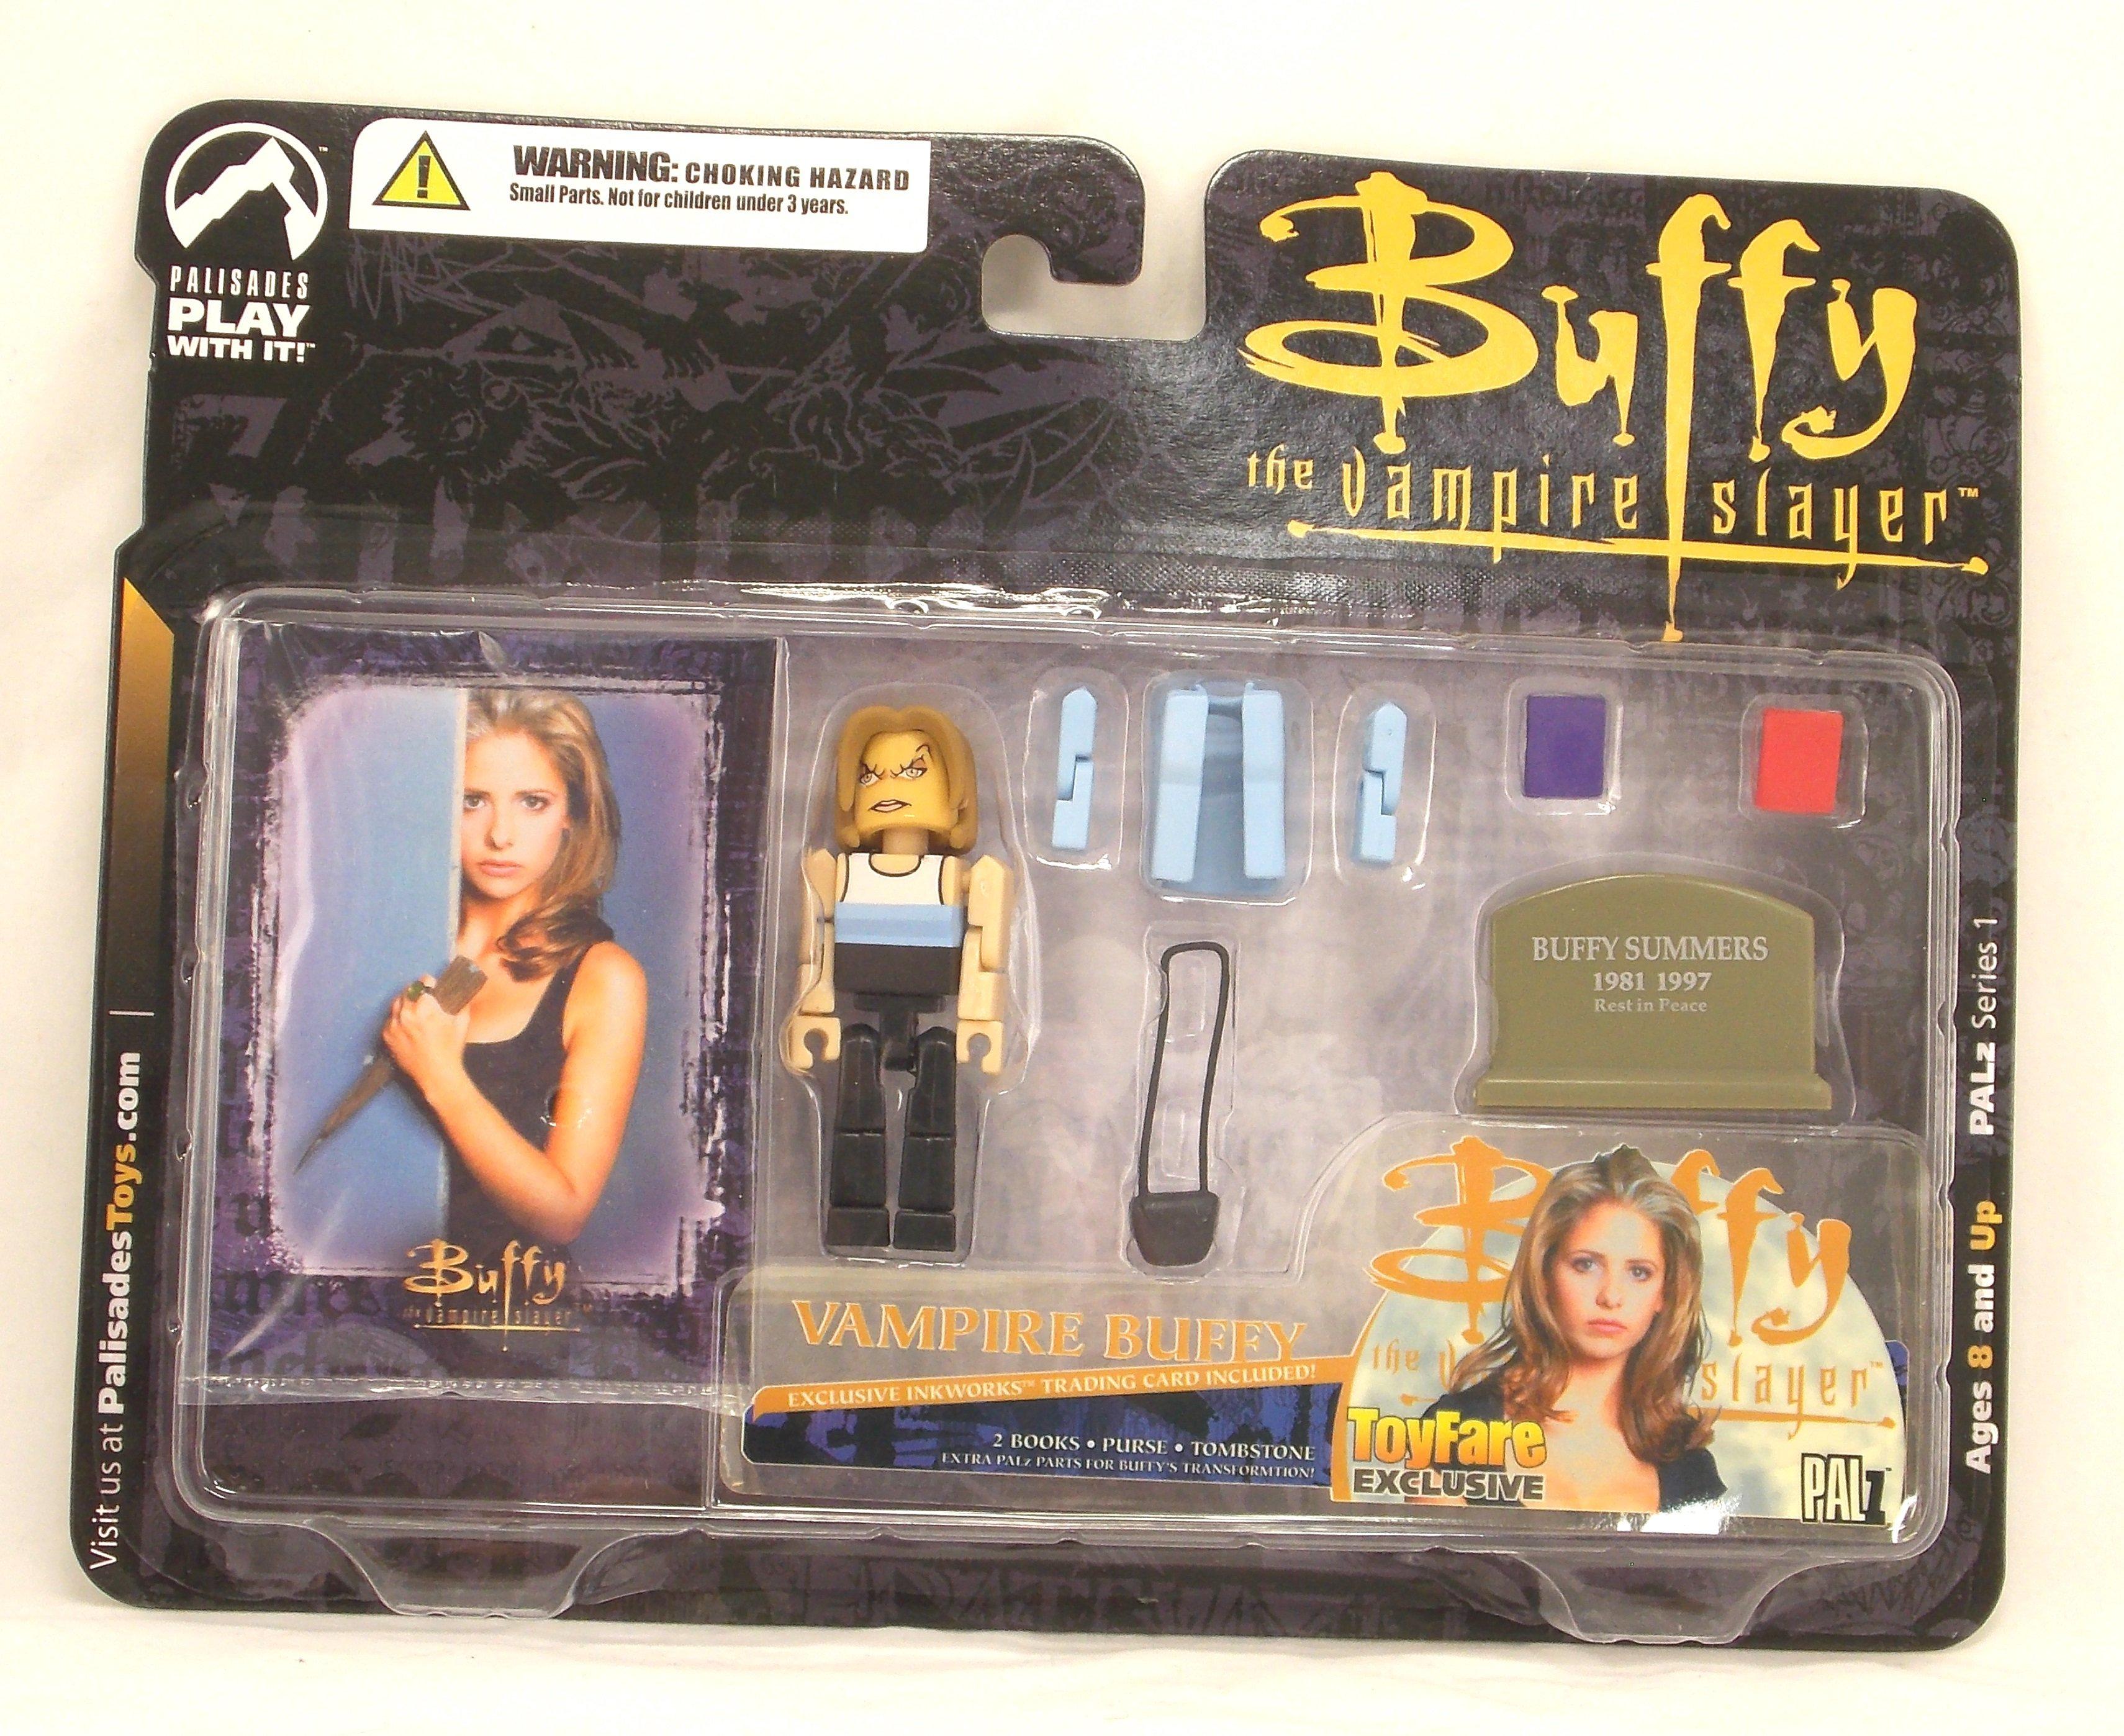 Buffy the Vampire Slayer "Vampire Buffy" Wizard World Exclusive Palz Figure